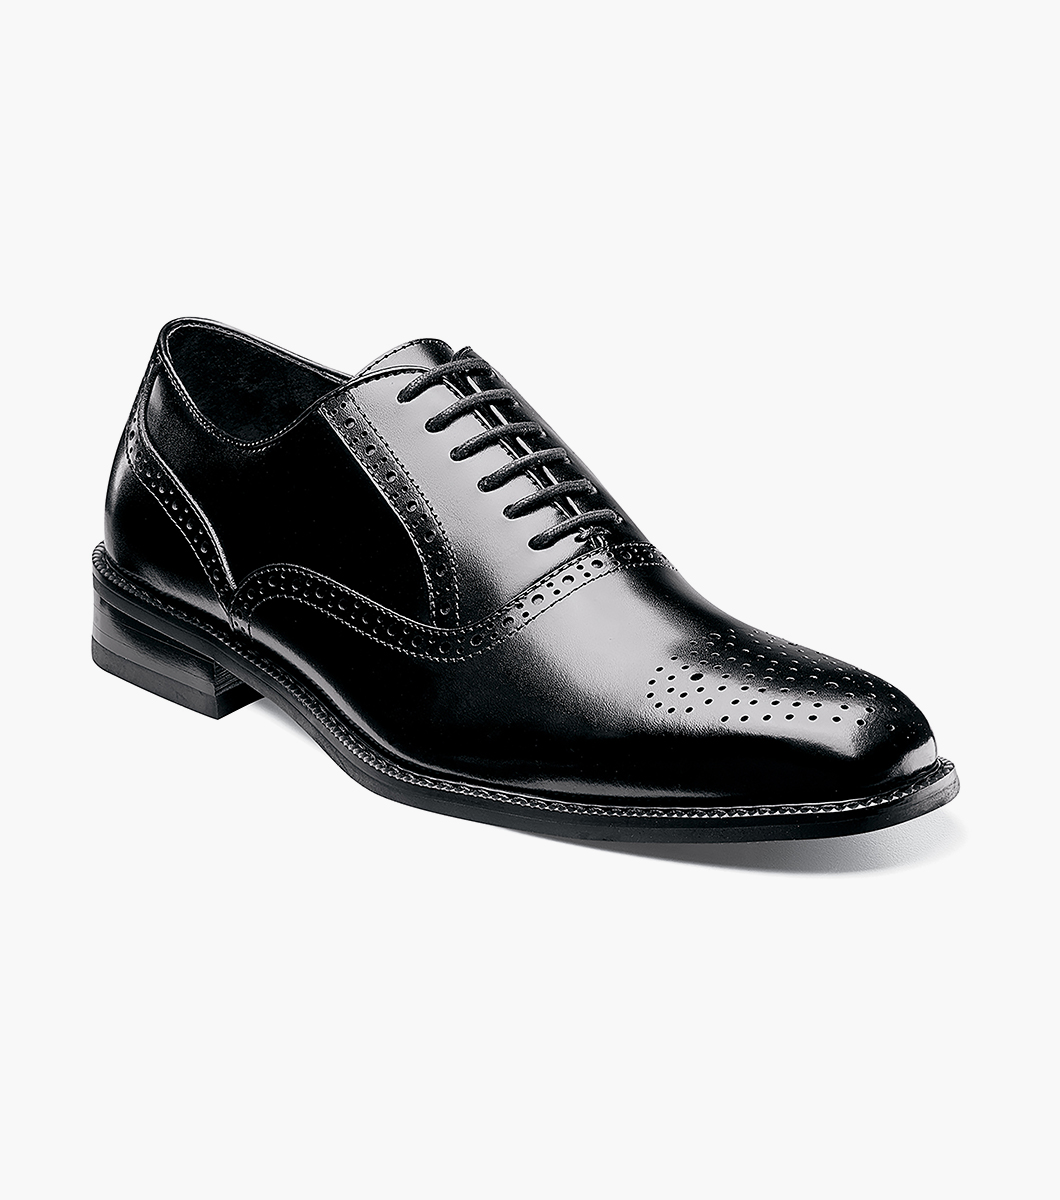 Men's Dress Shoes | Black Plain Toe Oxford | Stacy Adams Bishop